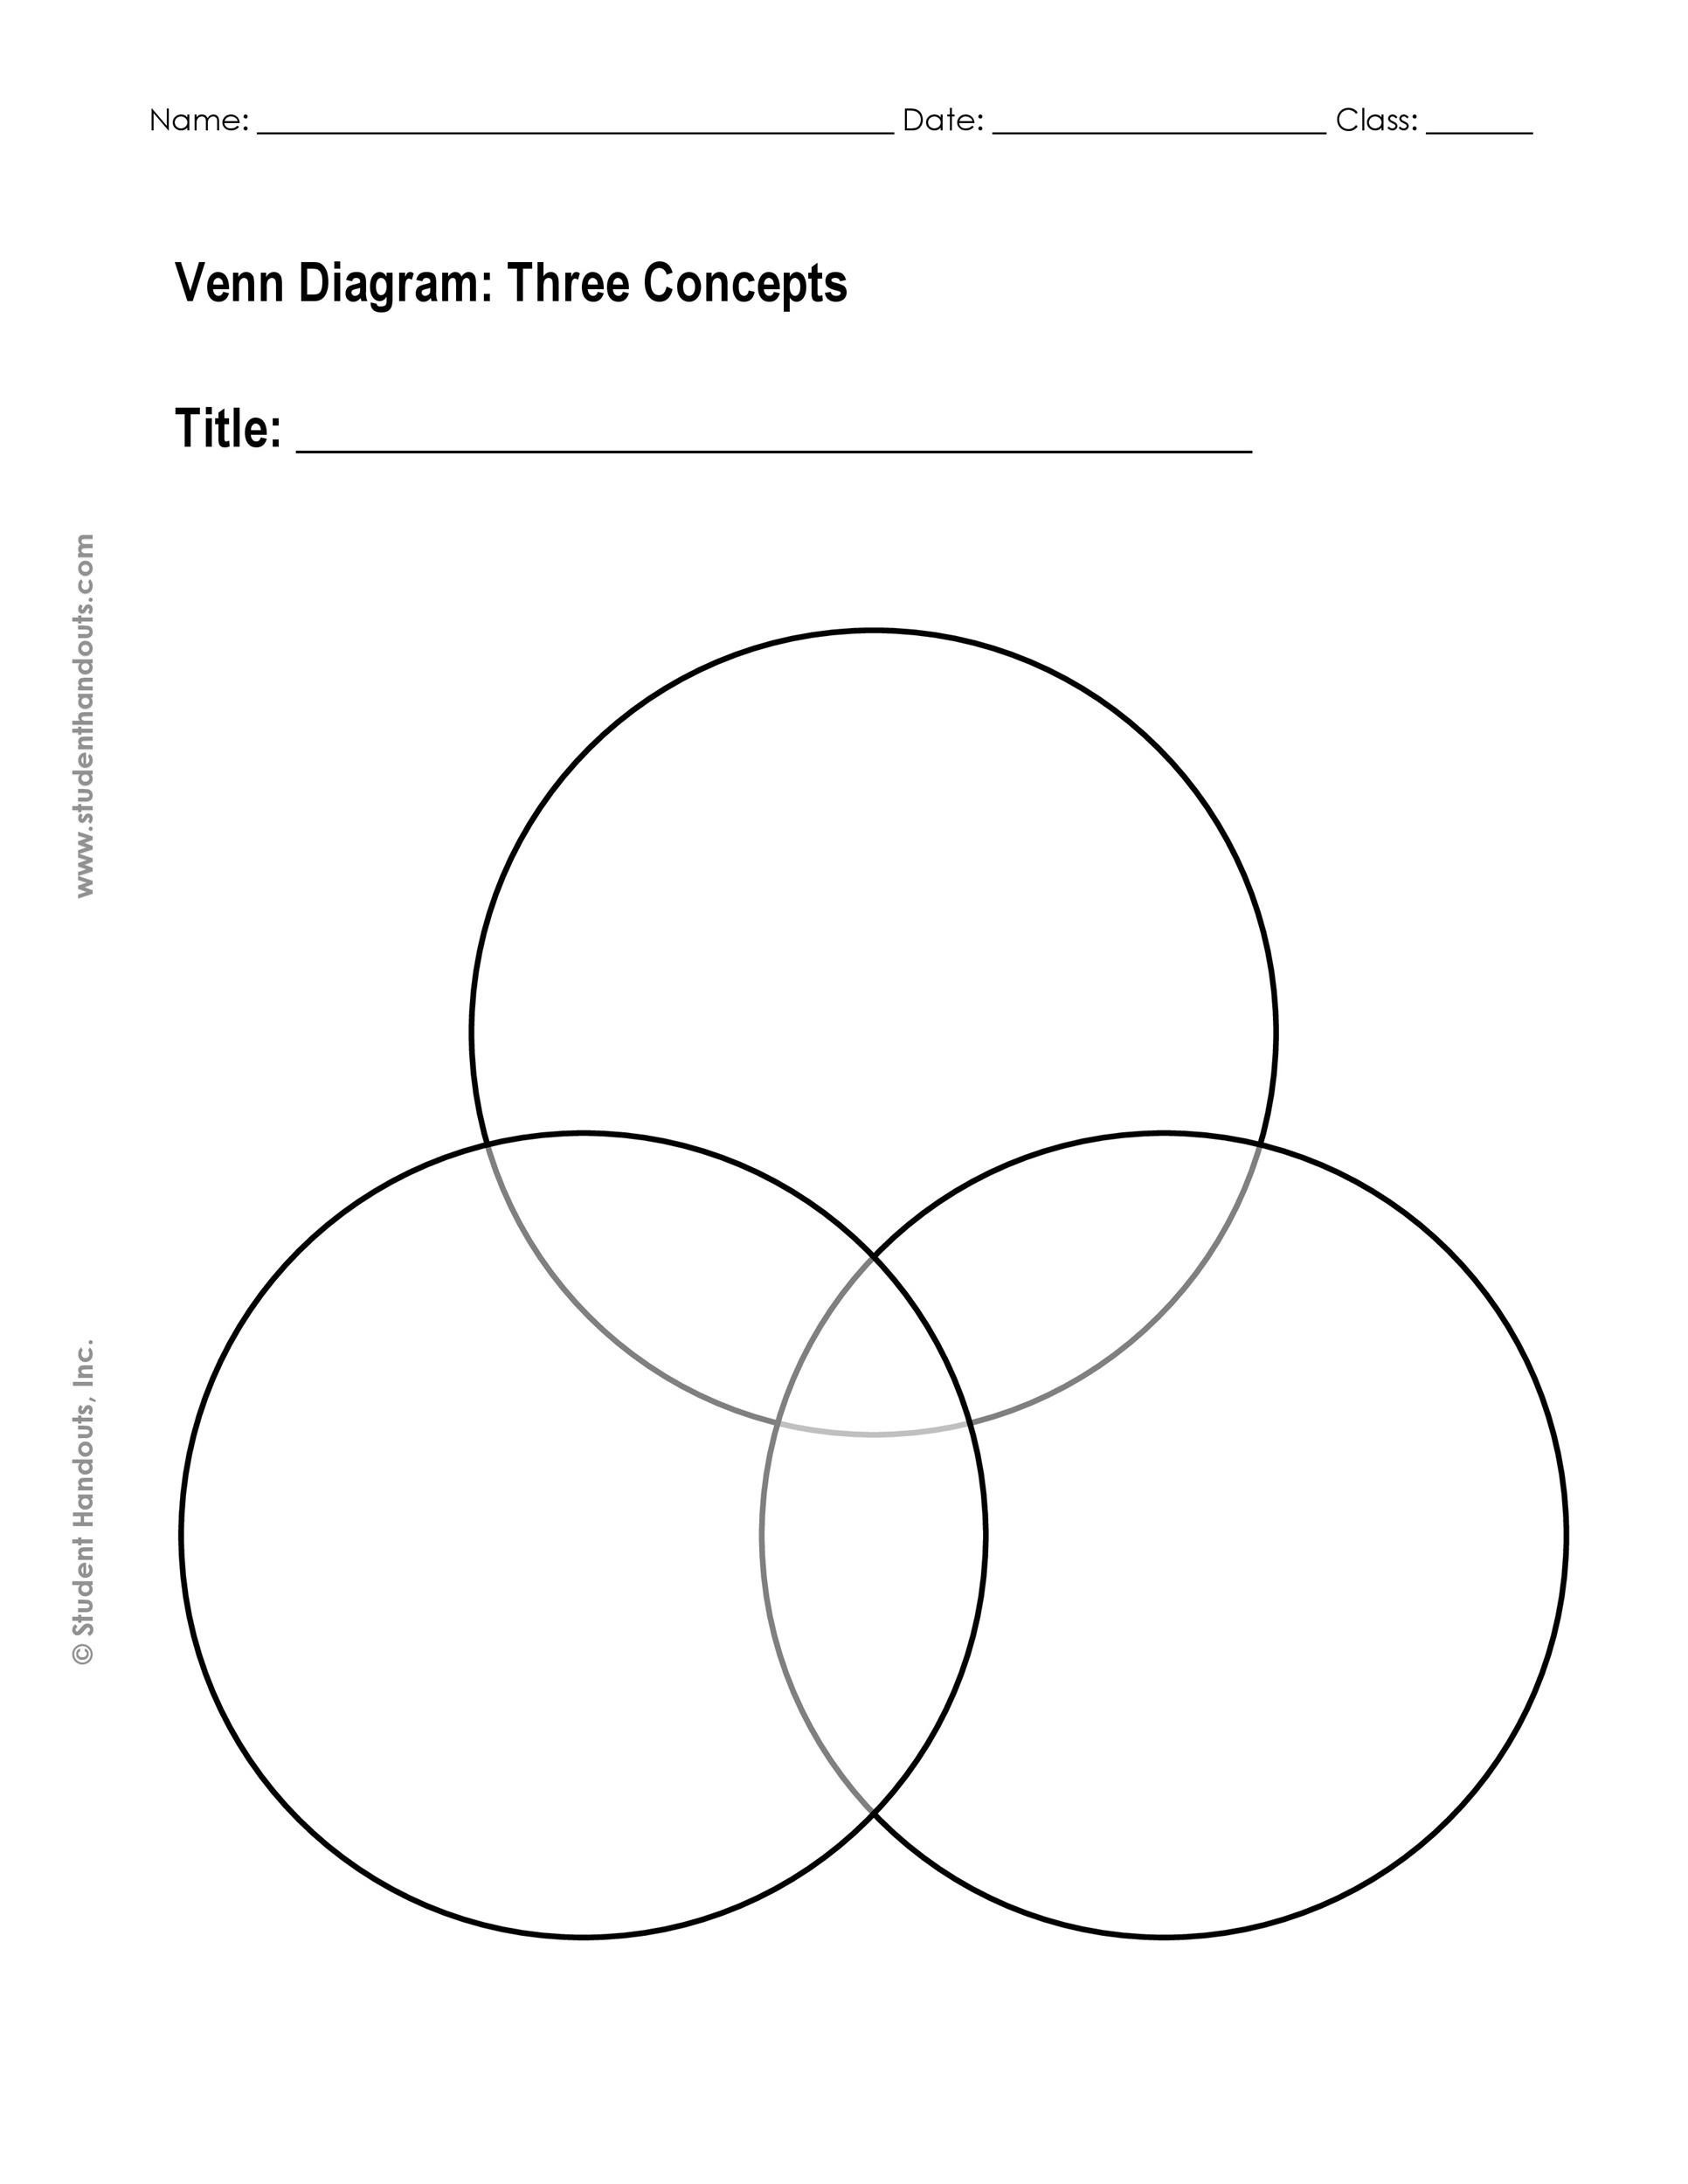 Free venn diagram template  09